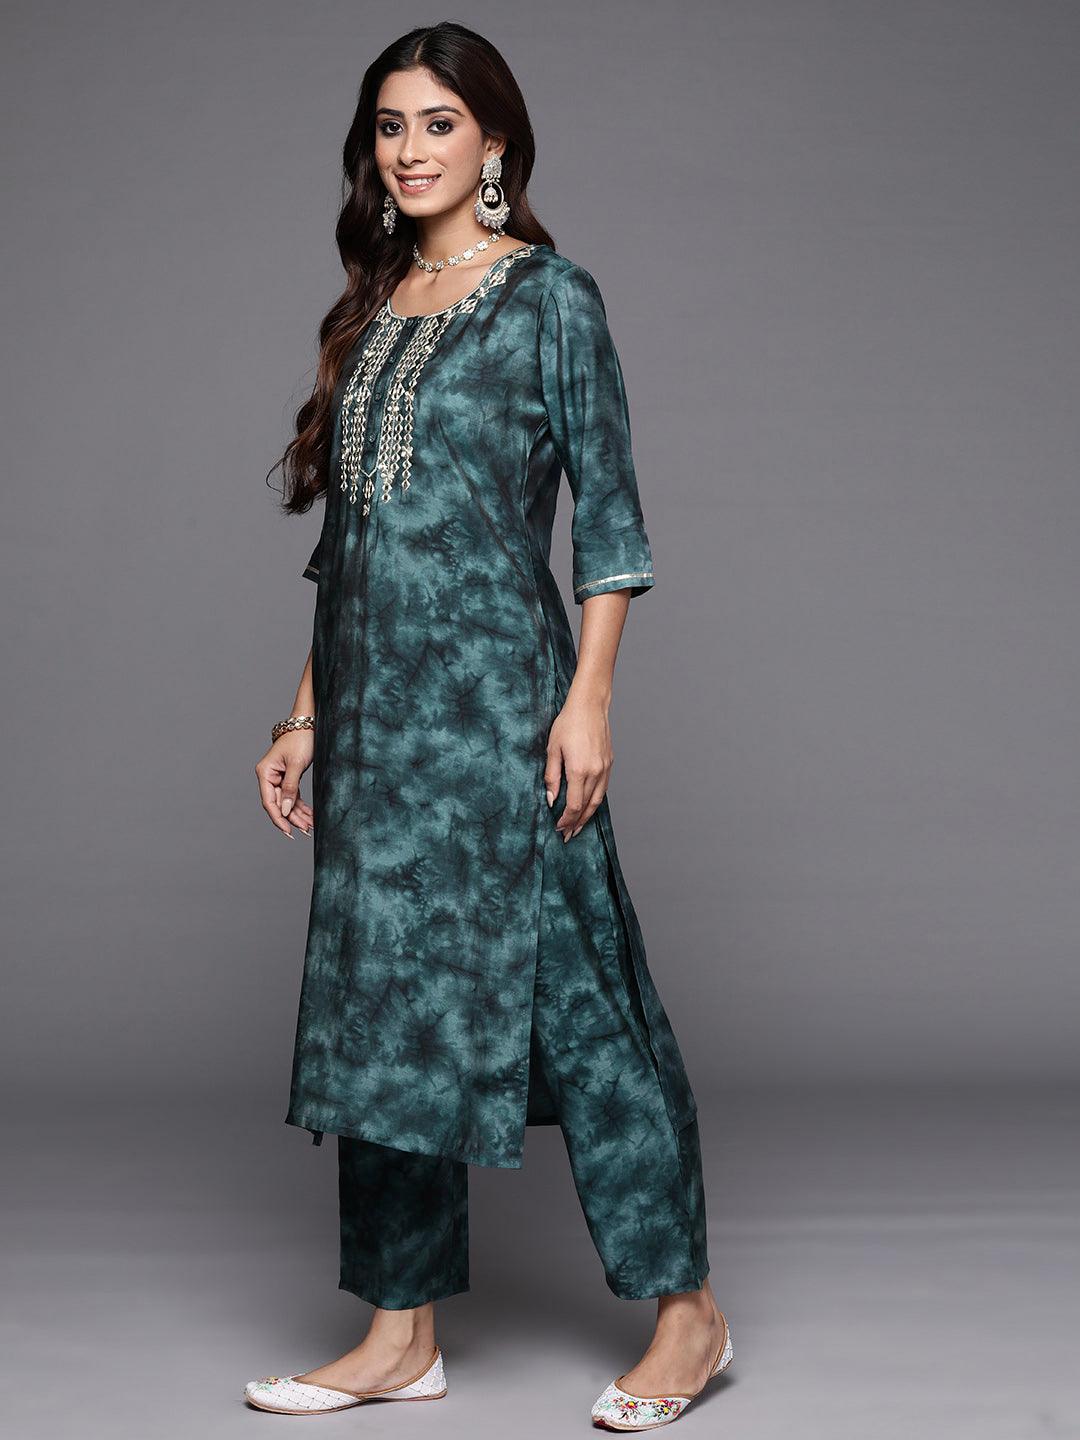 Grey Printed Silk Blend Pakistani Suit